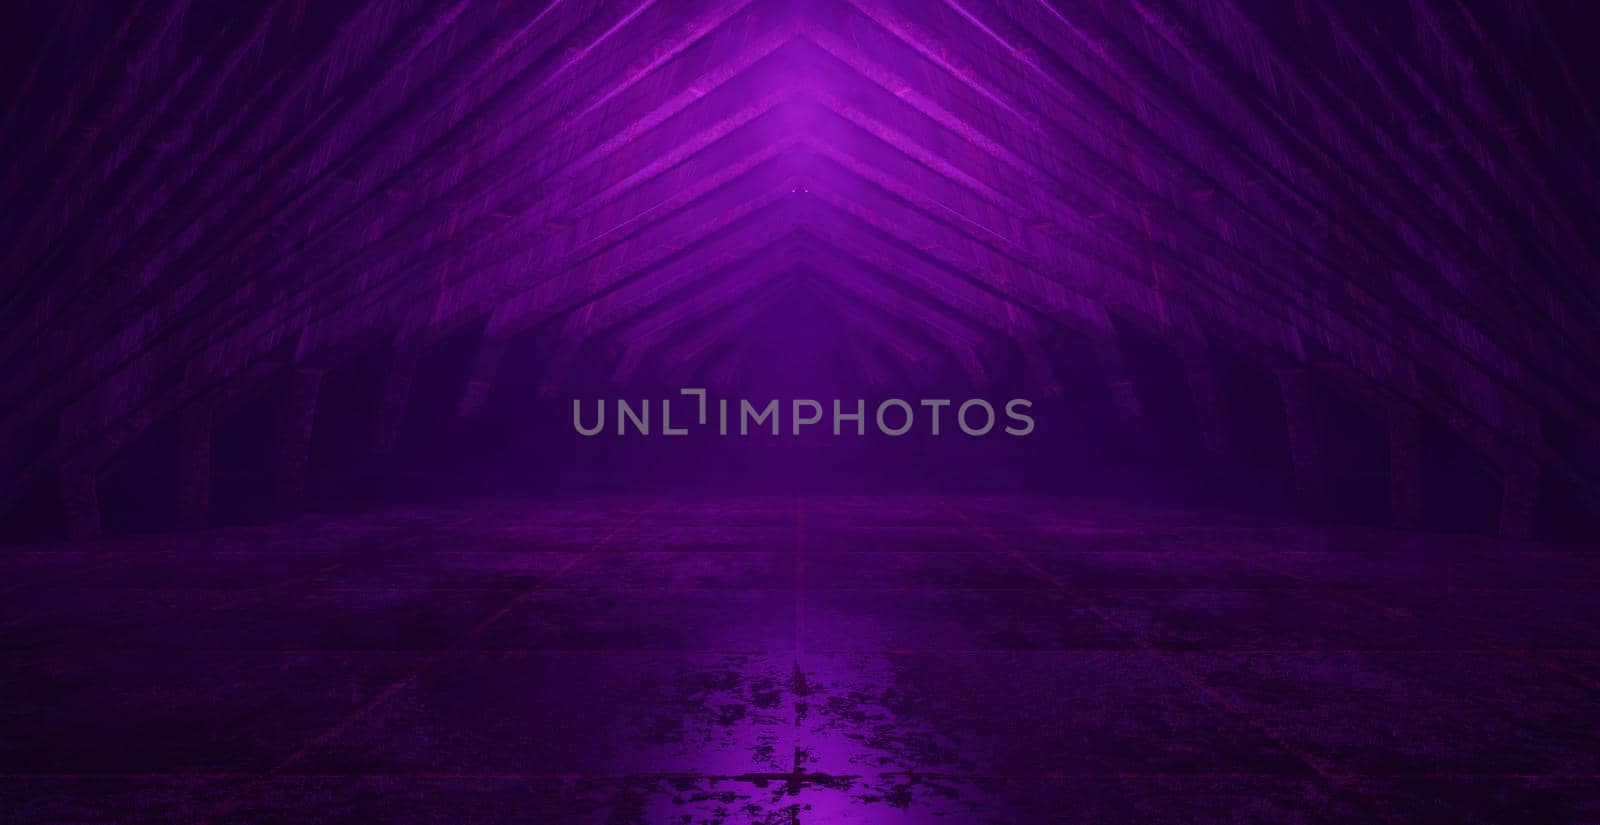 Fantasy Dystopian Bright Purple Laser Graphic Banner Background Wallpaper 3D Illustration